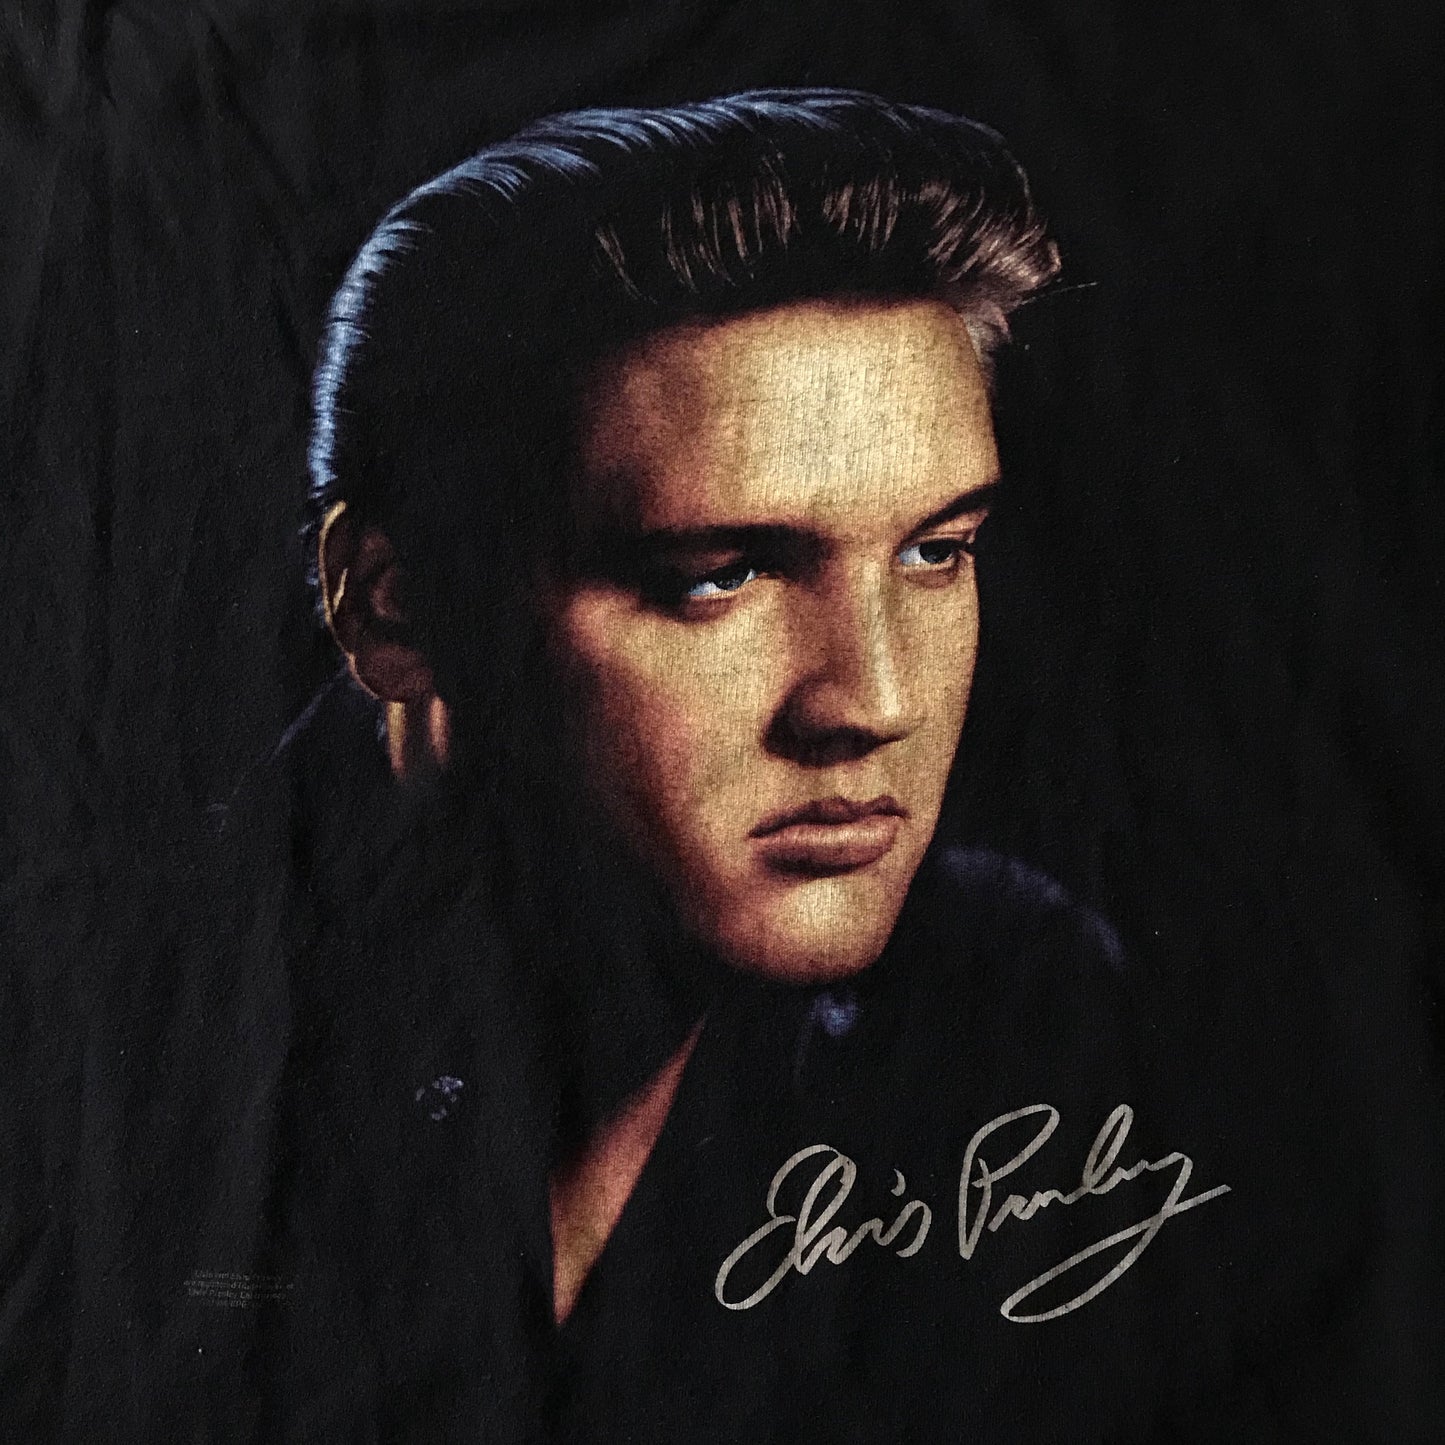 Vintage Elvis Presley 96 T-shirt